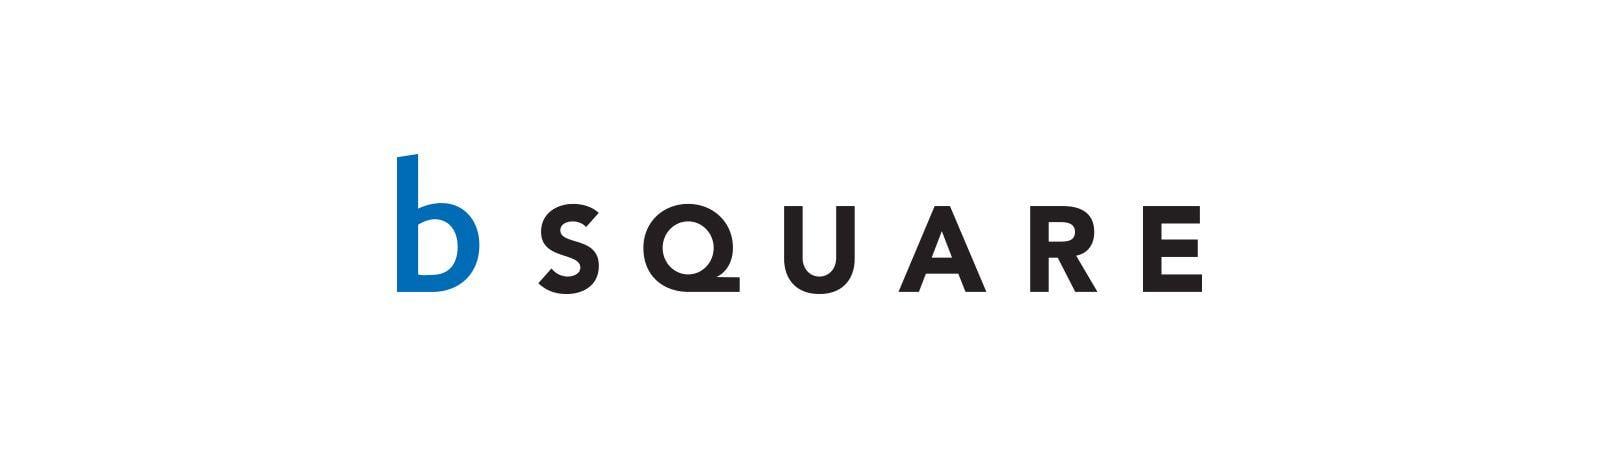 B- Square Logo - BSQUARE Corporation. Portfolios